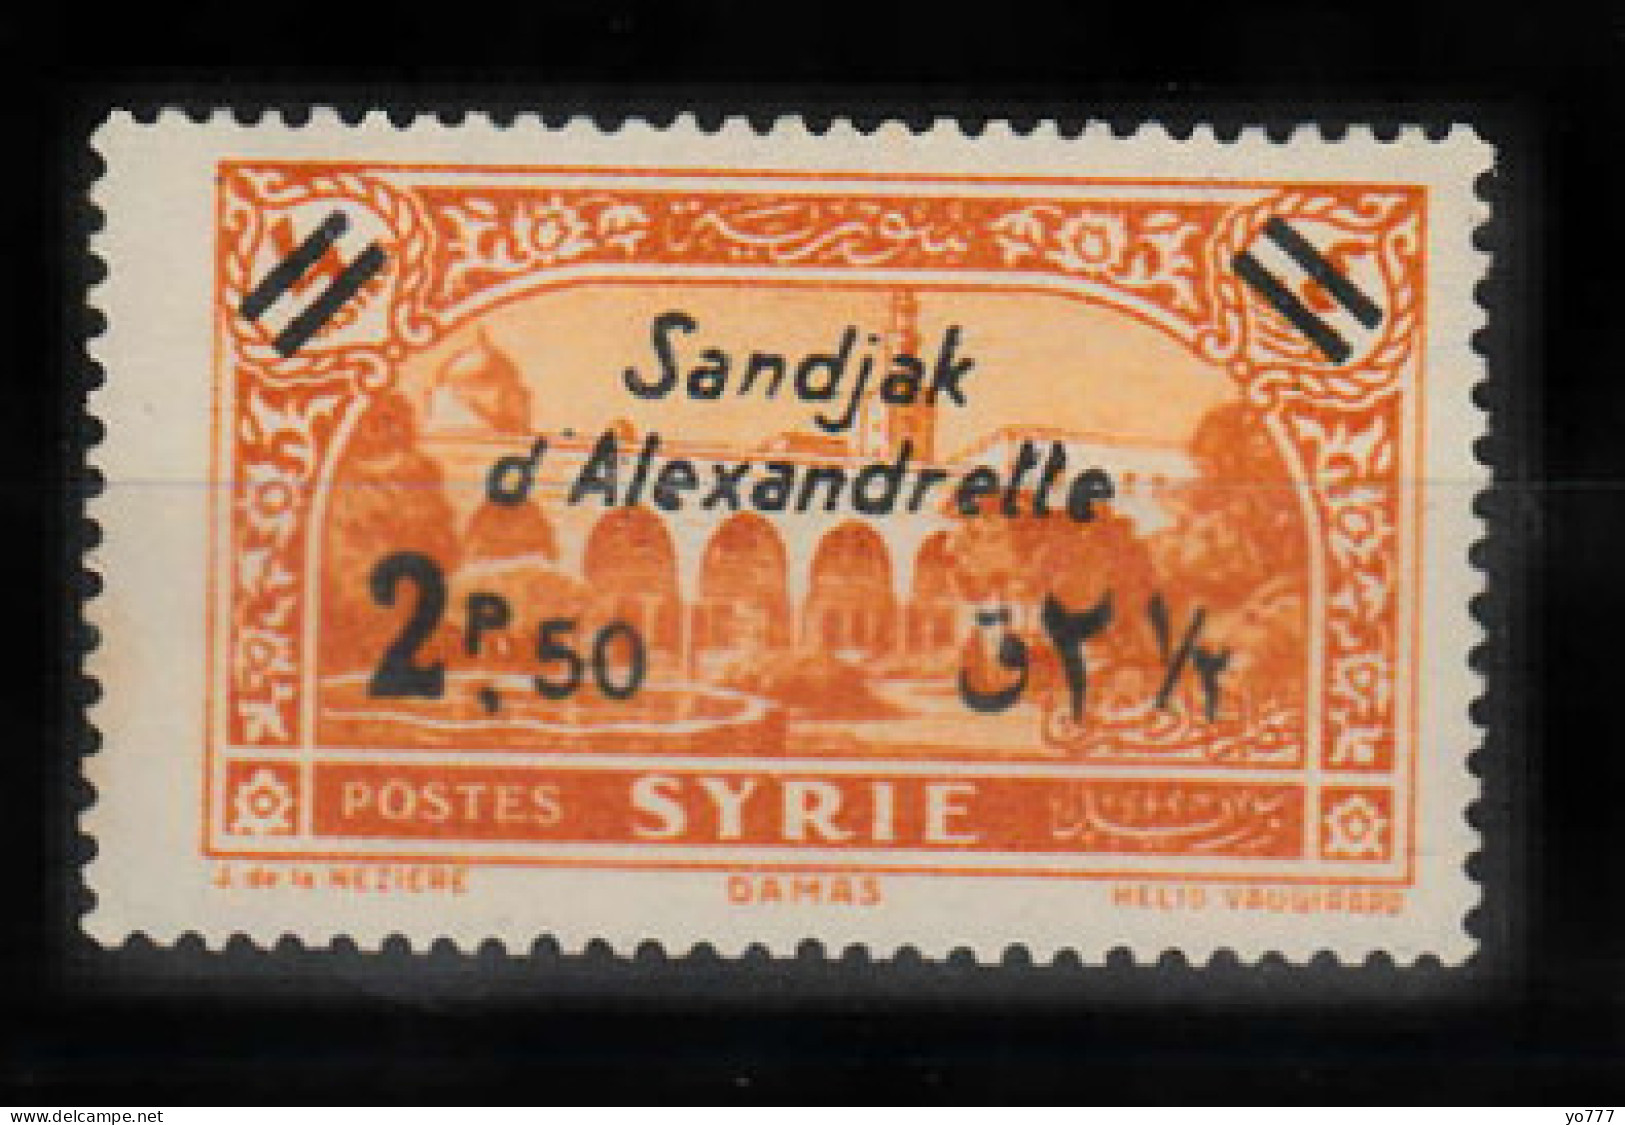 (H-011) 1938 HATAY STAMPS WITH BLACK SANDJAK D'ALEXANDRETTE SURCHARGE ON SYRIA POSTAGE AIRPOST STAMPS MH* NO GUM - 1934-39 Sandschak Alexandrette & Hatay